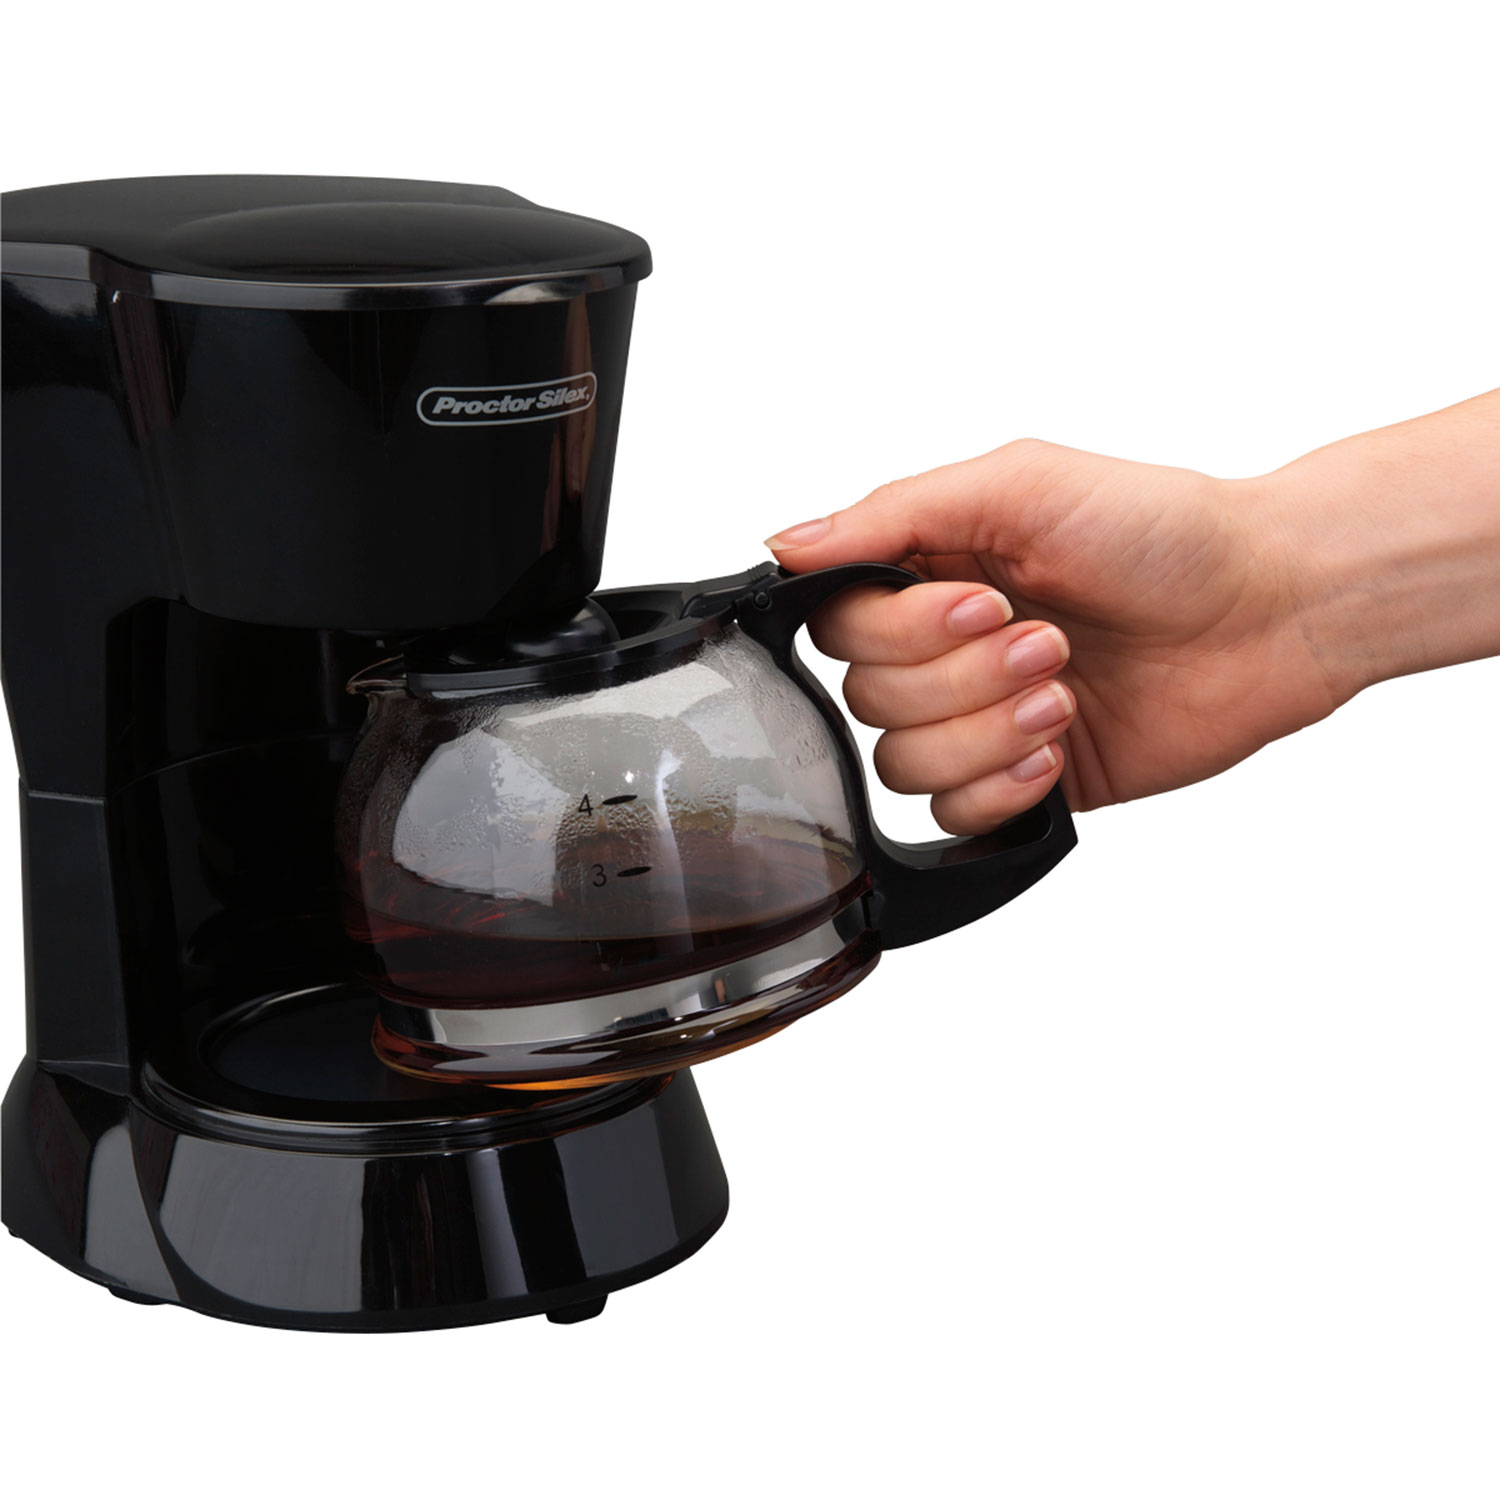  Proctor Silex Coffee Maker, Black: Drip Coffeemakers